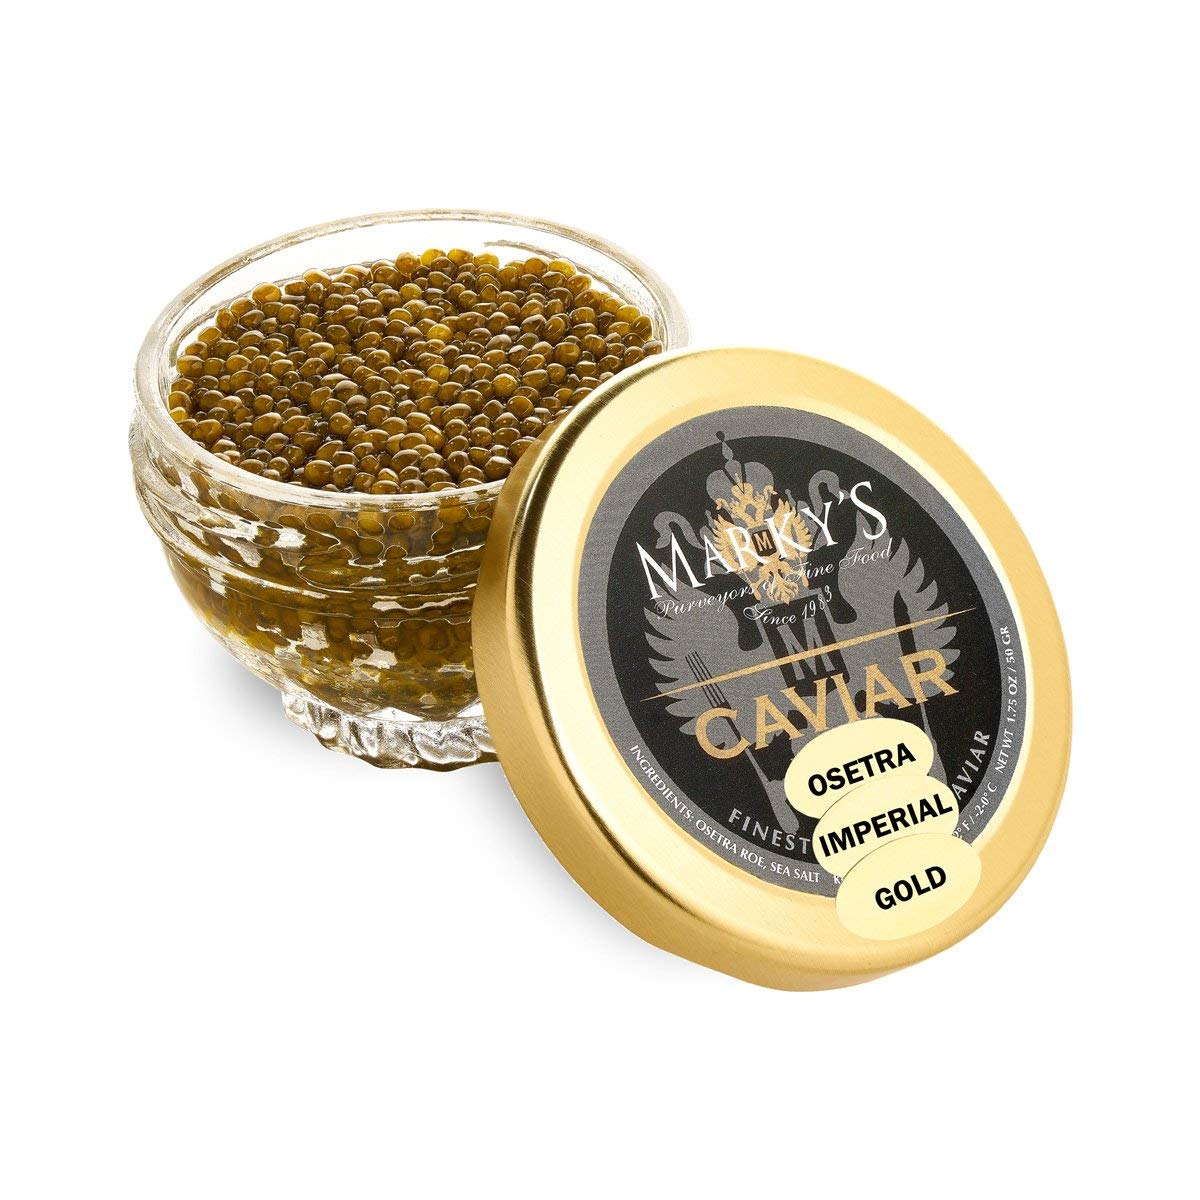 extravagant expensive gold caviar